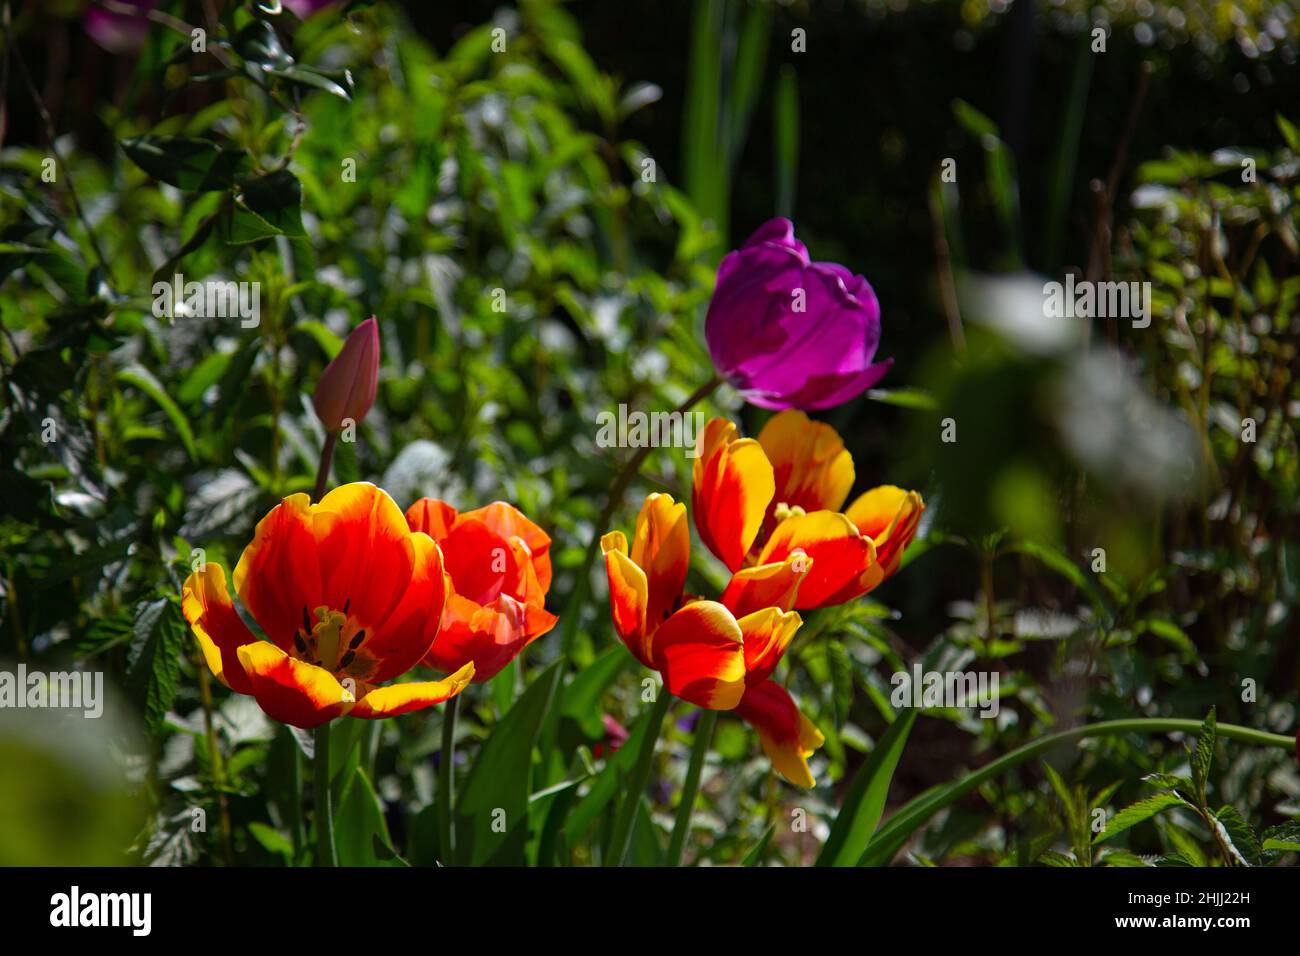 Tulips flowering in a garden in spring Stock Photo